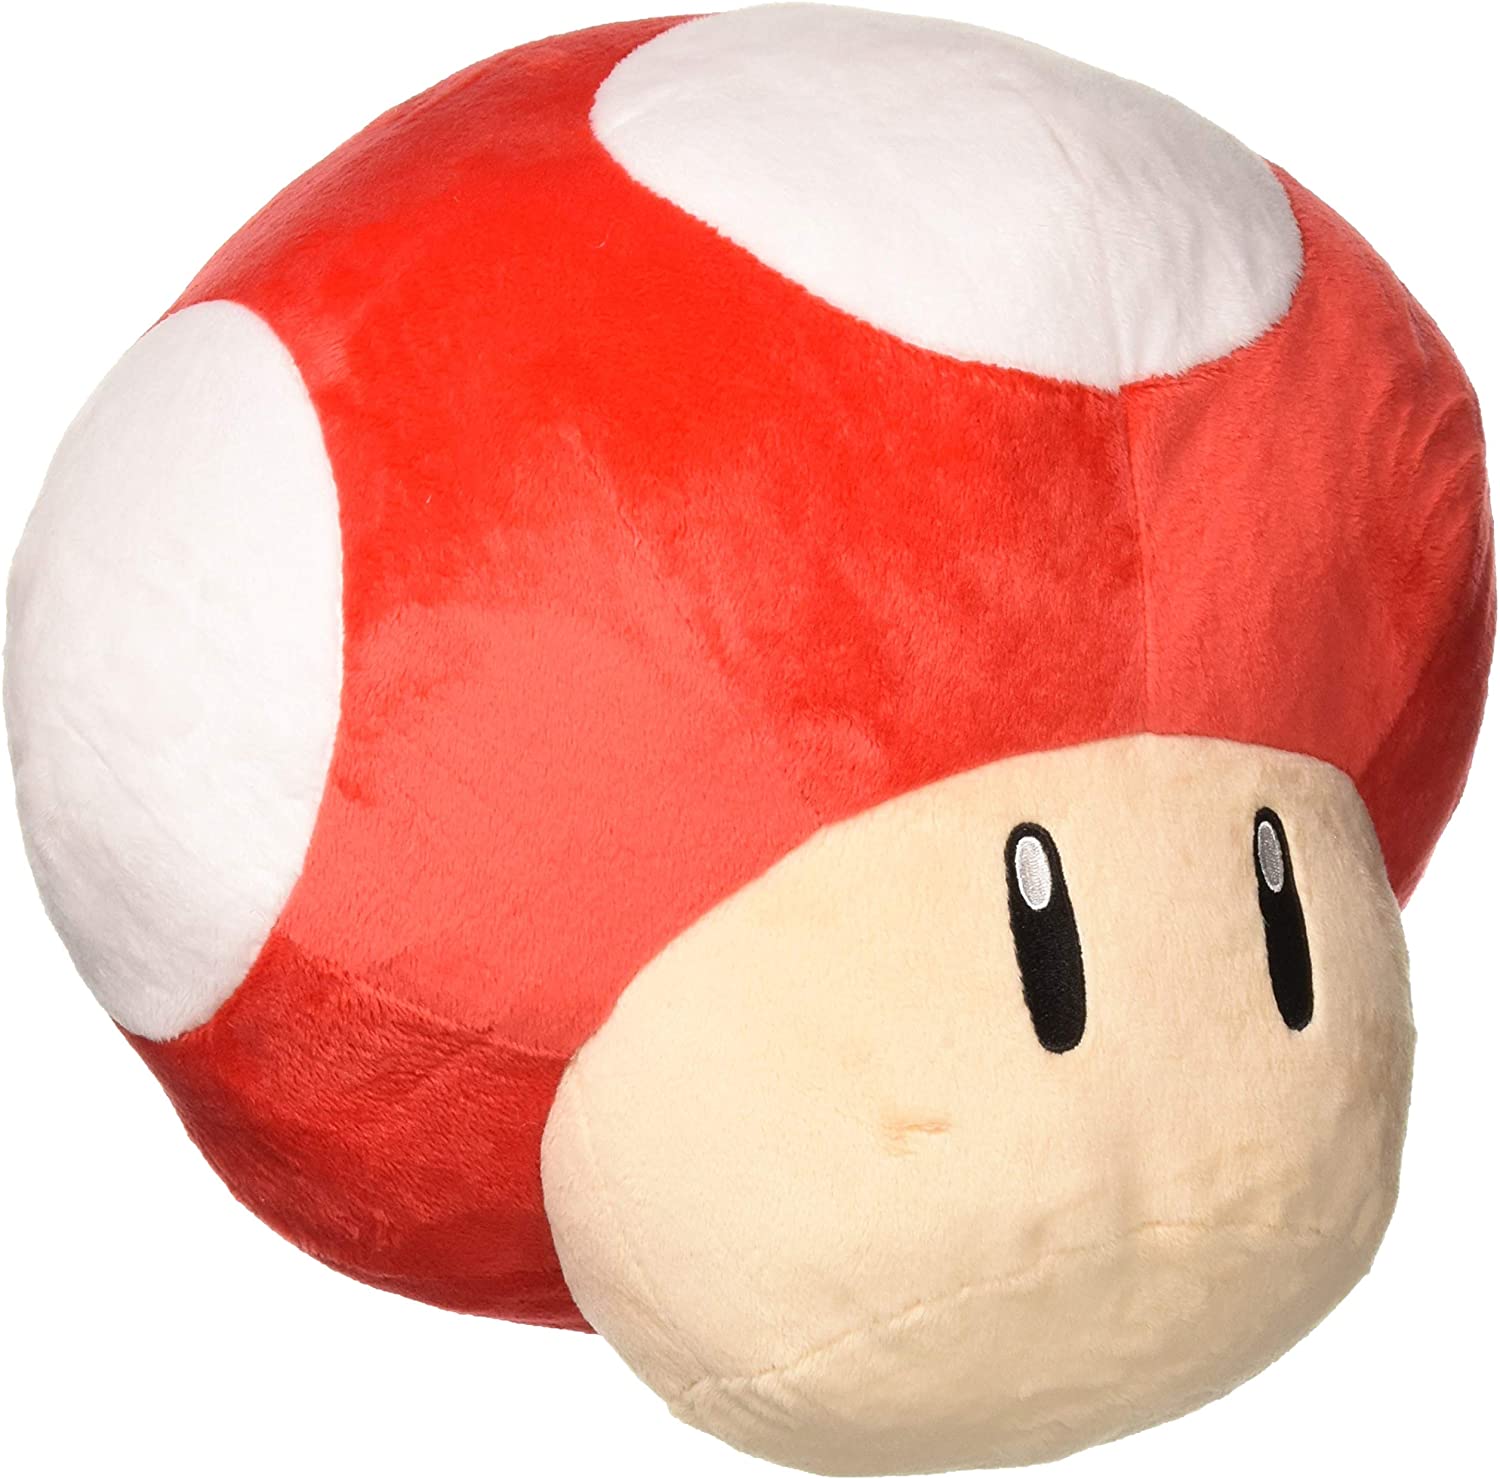 Mario Mushroom Pillow